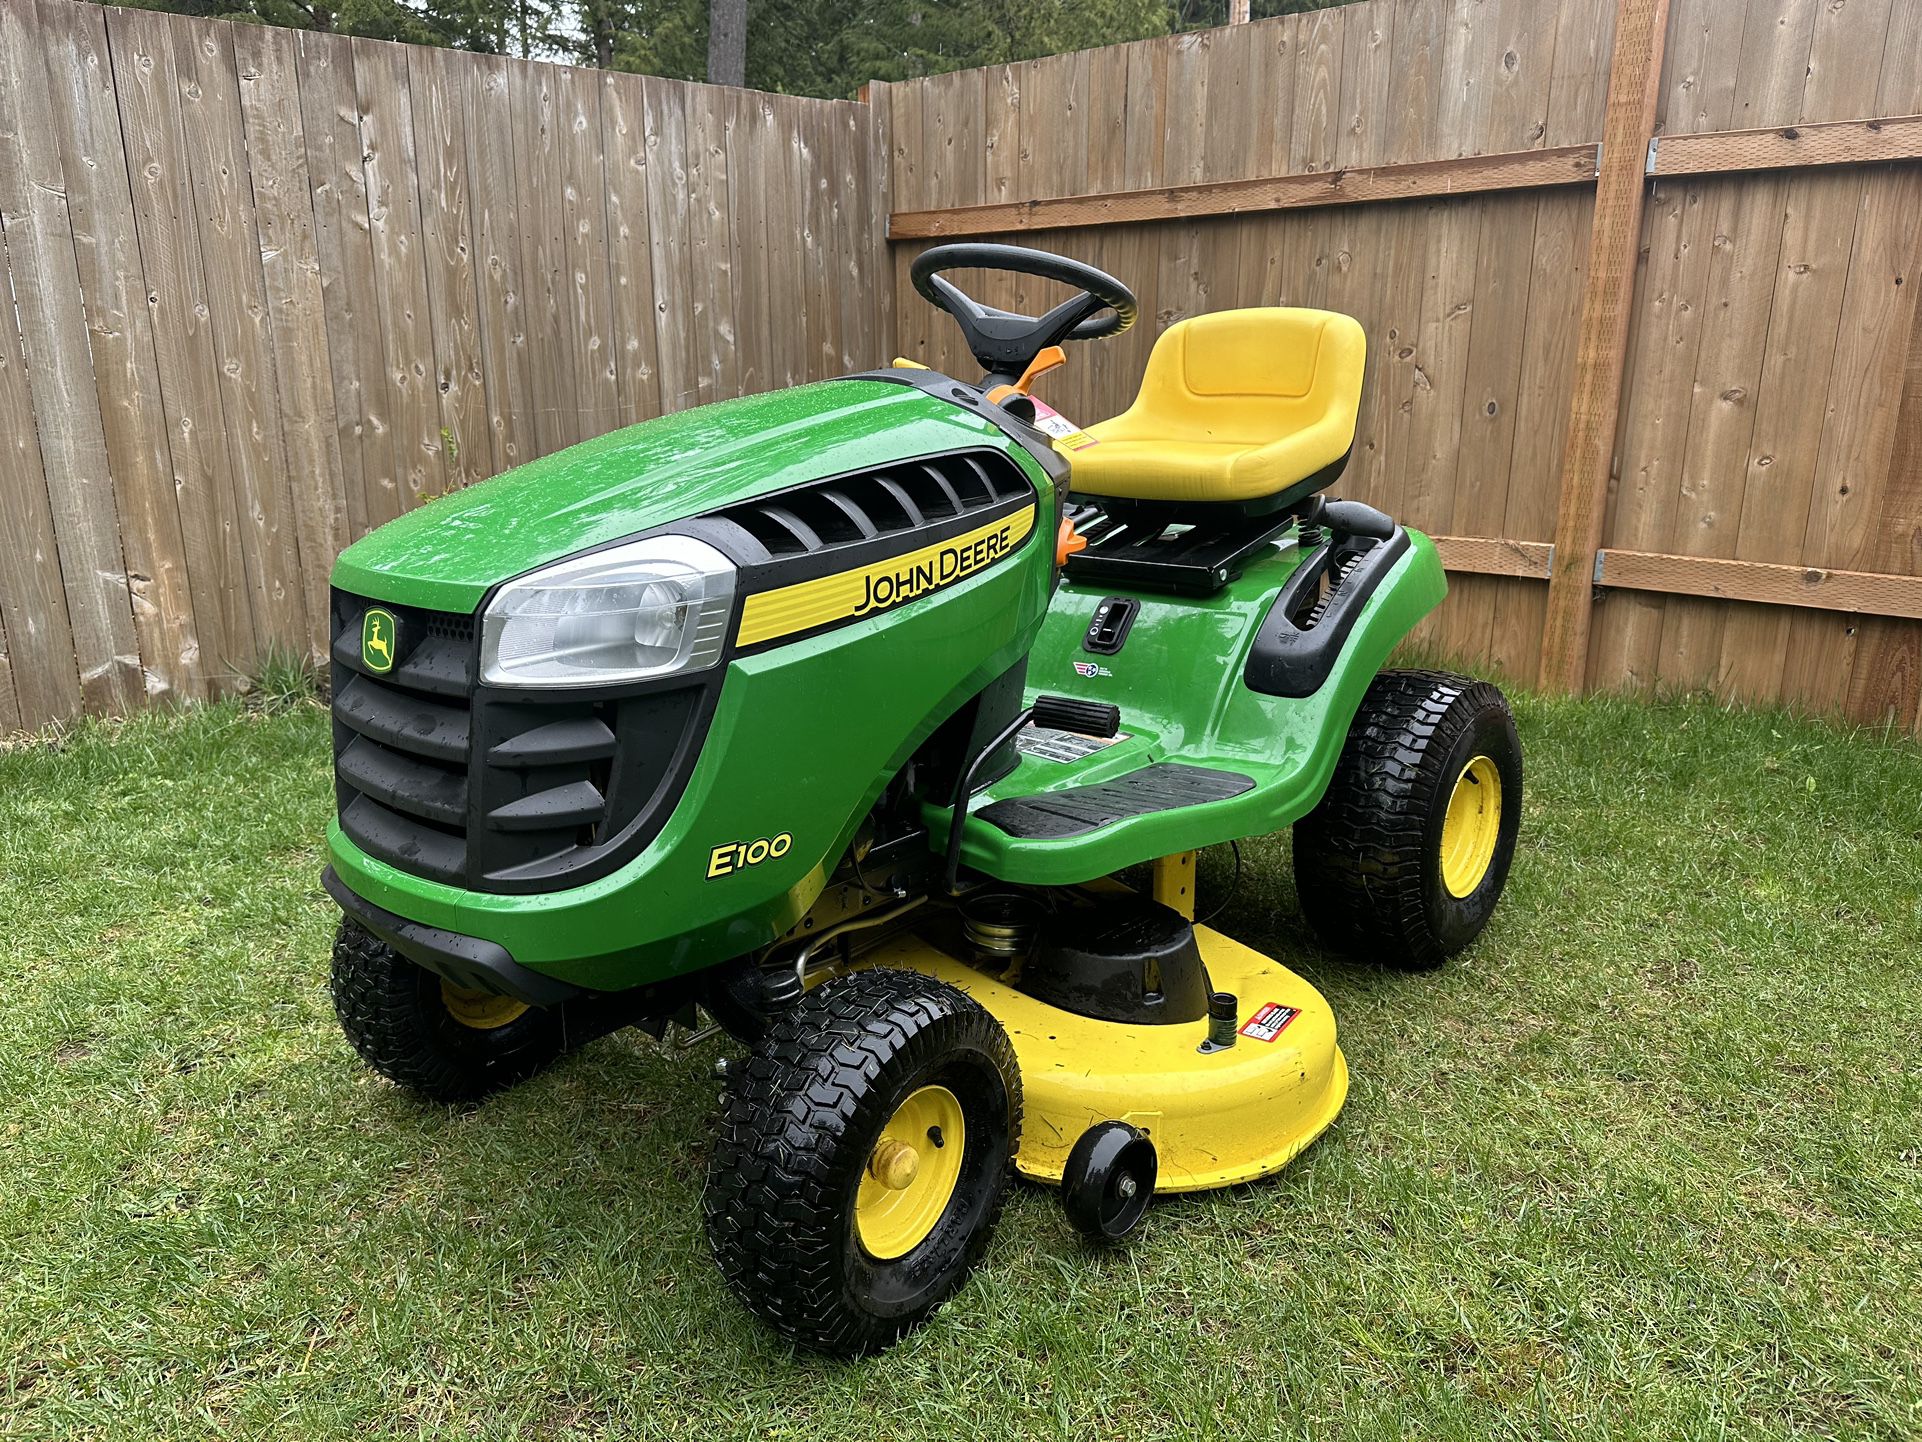 John Deere E100 Lawn Mower 